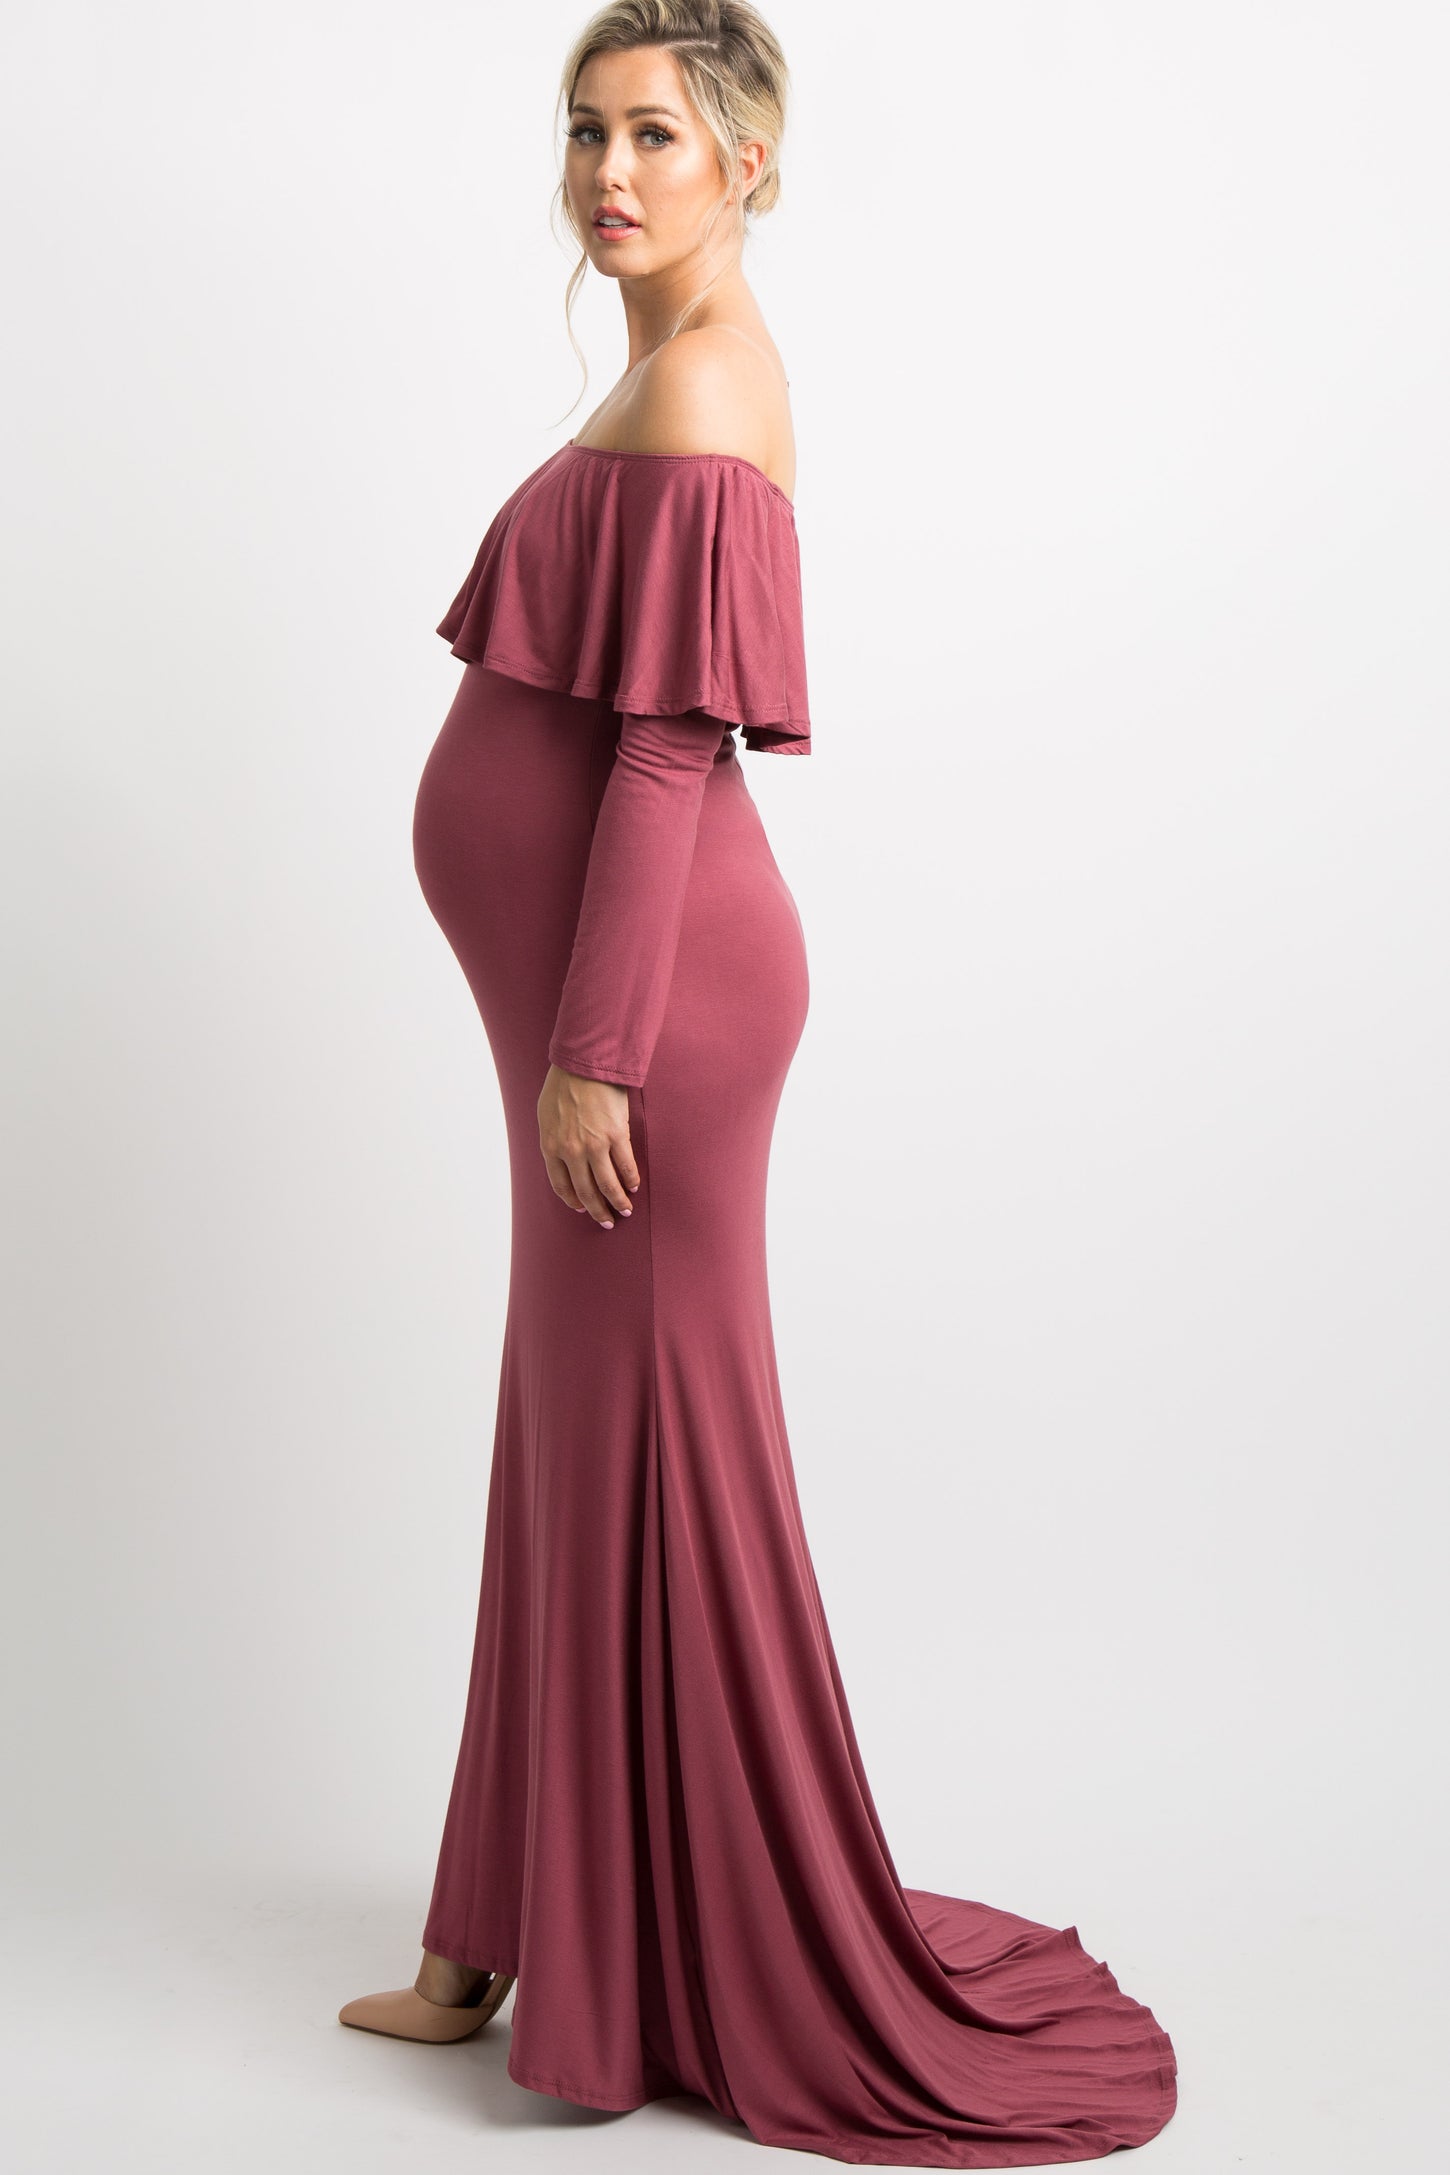 PinkBlush Dark Mauve Off Shoulder Ruffle Maternity Photoshoot Gown/Dre